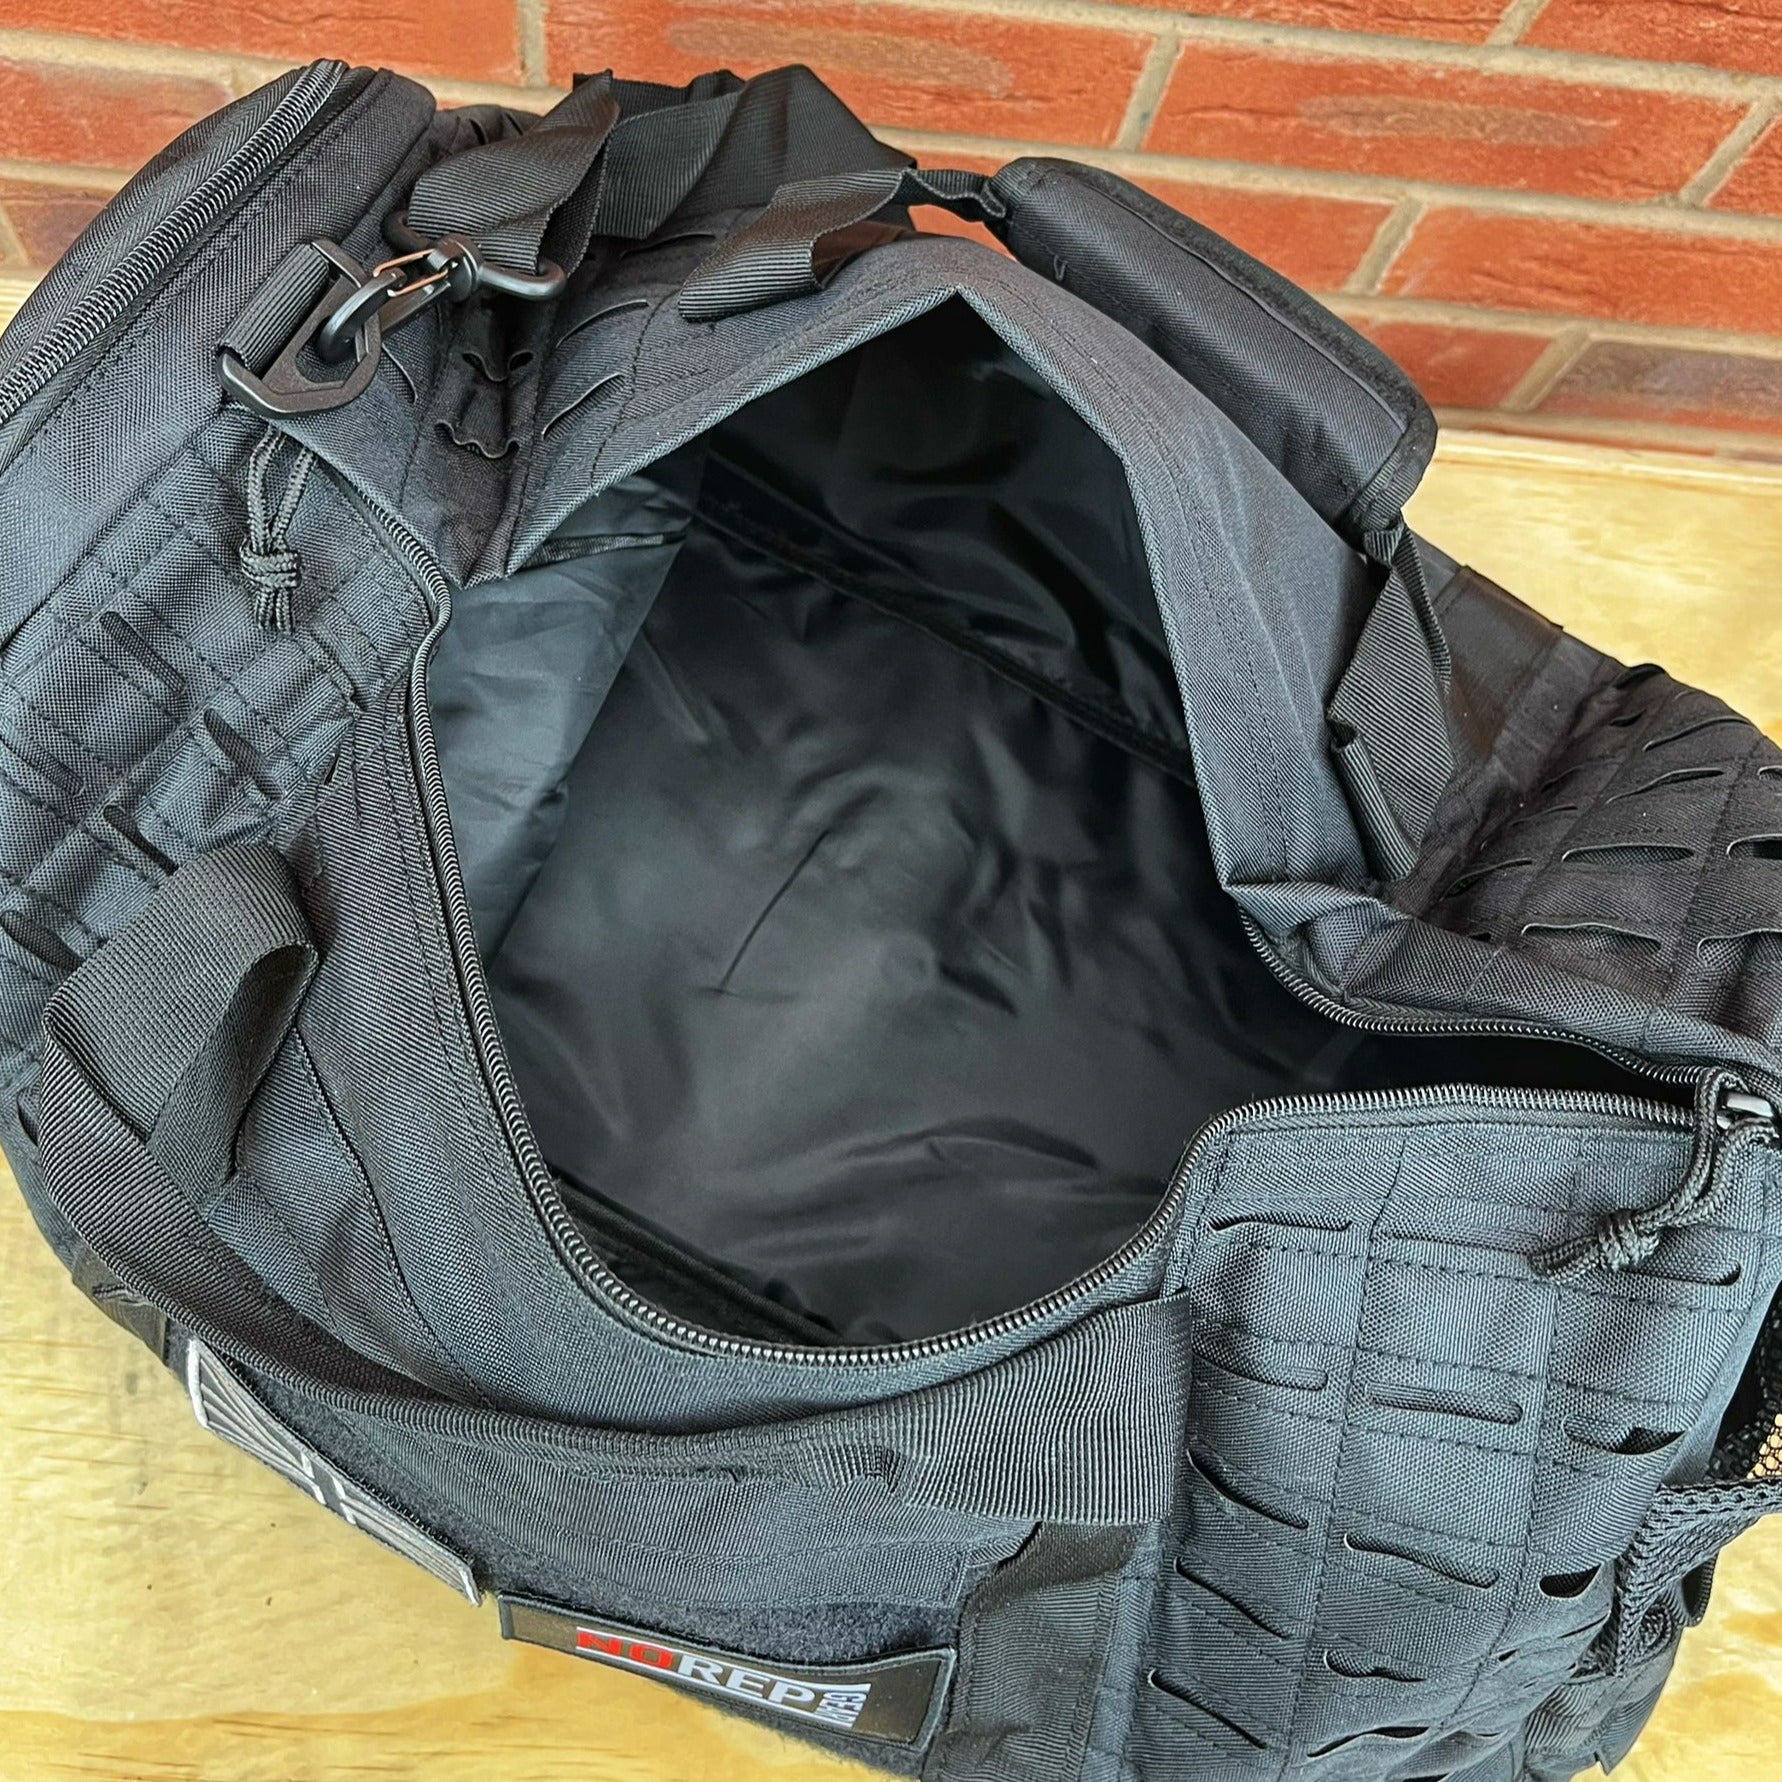 Duffel bag, internal bag storage